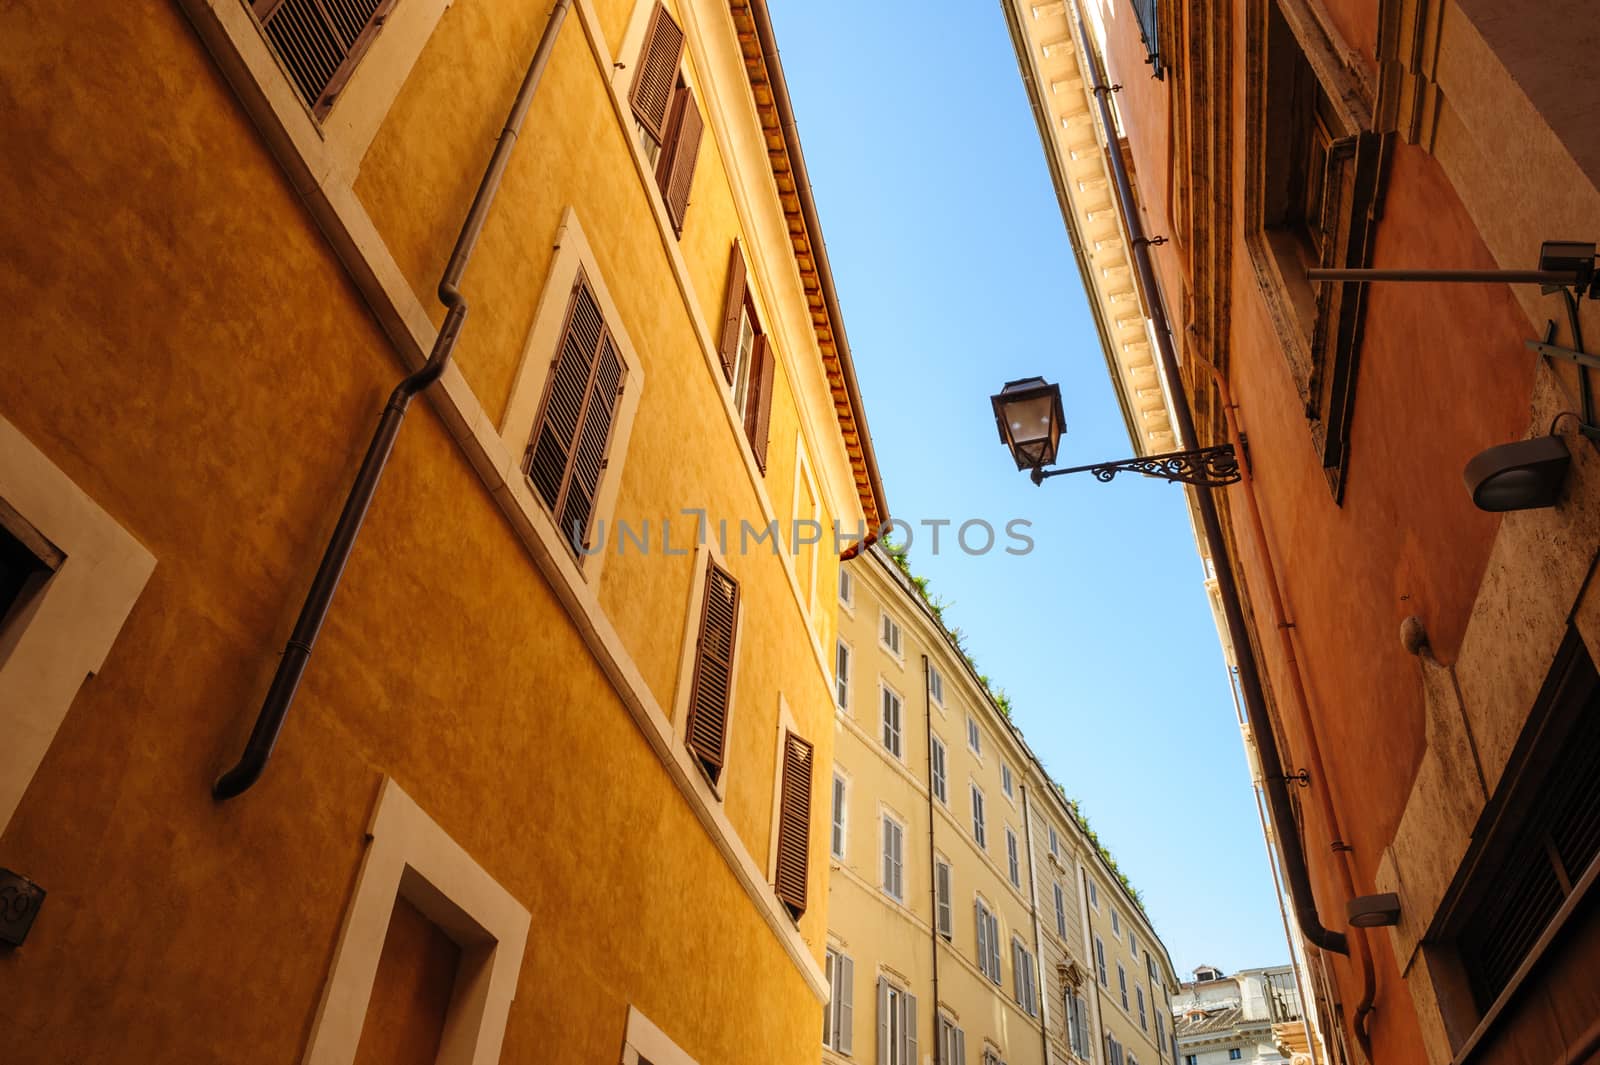 Narrow streets of old historic Rome, Italy